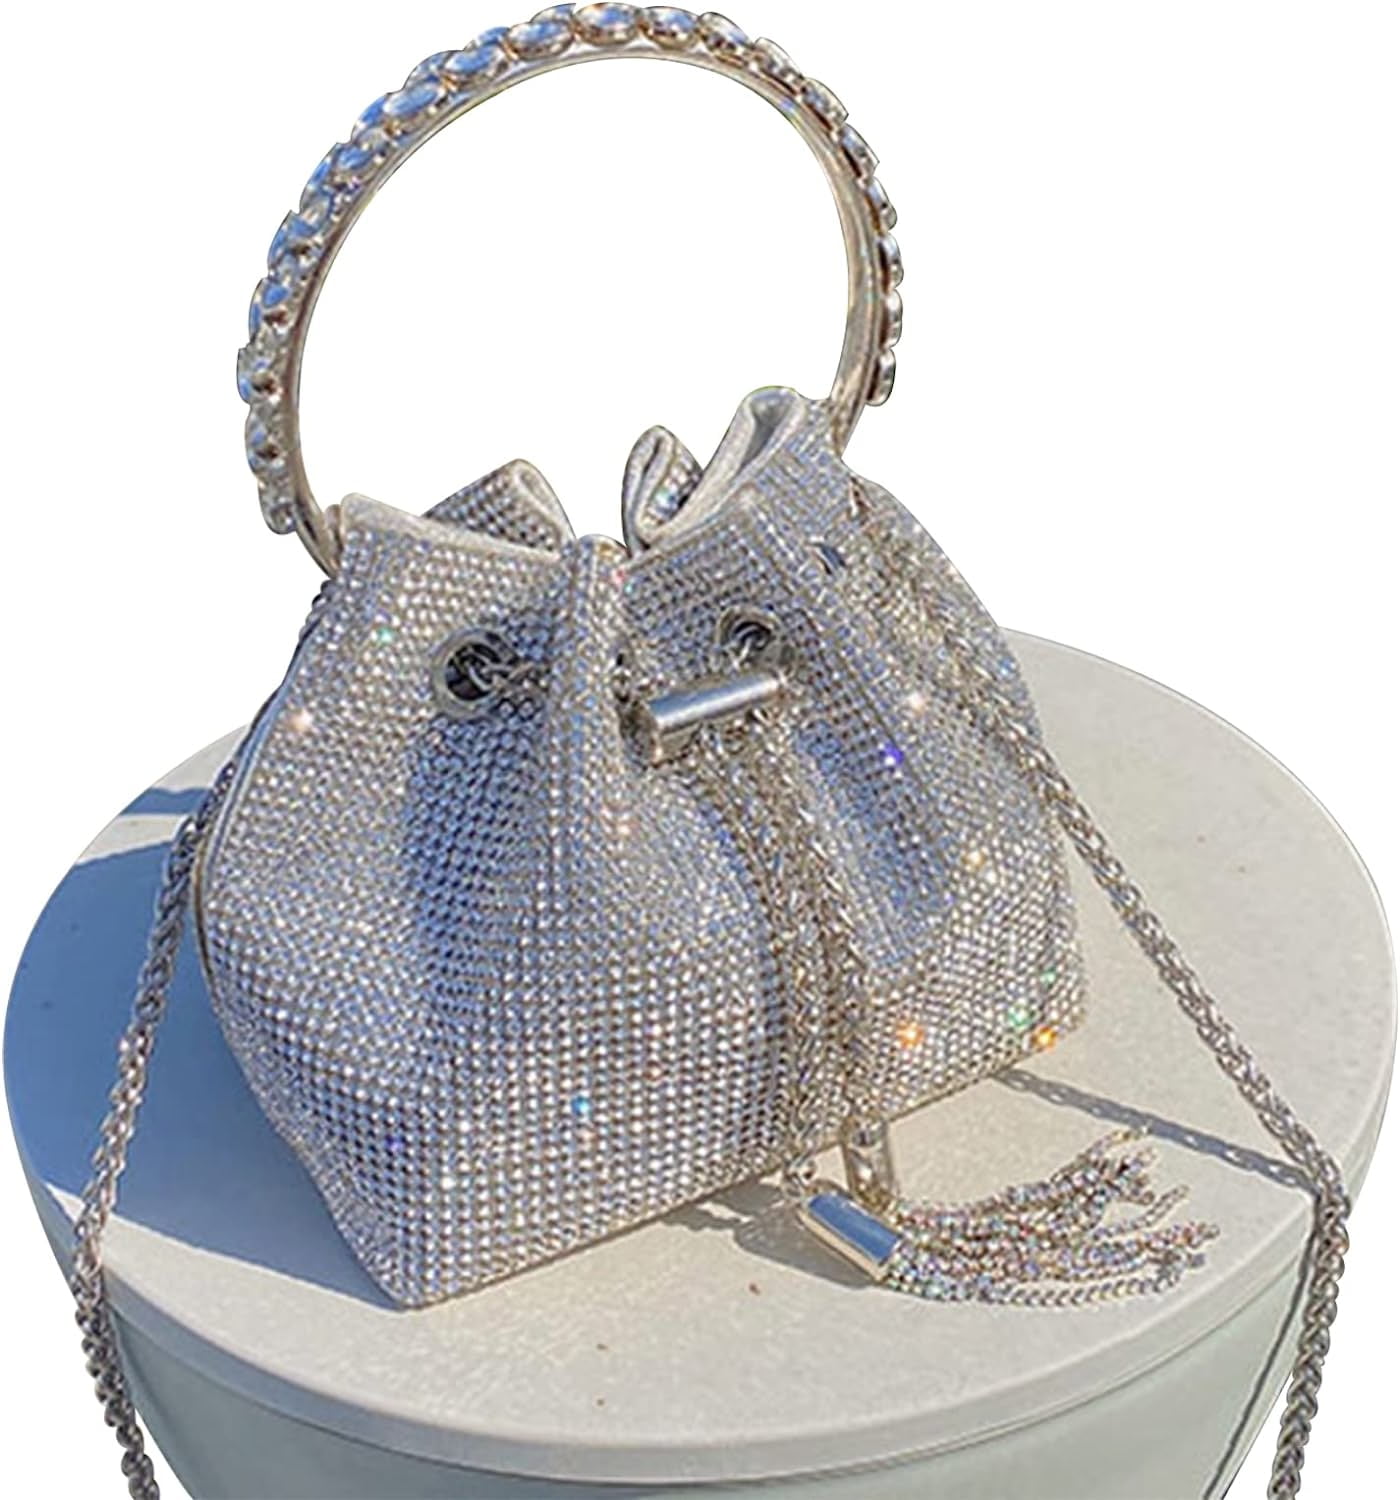 LAM GALLERY Bling Silver Chain Crossbody Bag Sparkling Silver Evening Clutch  Purse Glitter Chain Shoulder Handbag: Handbags: Amazon.com